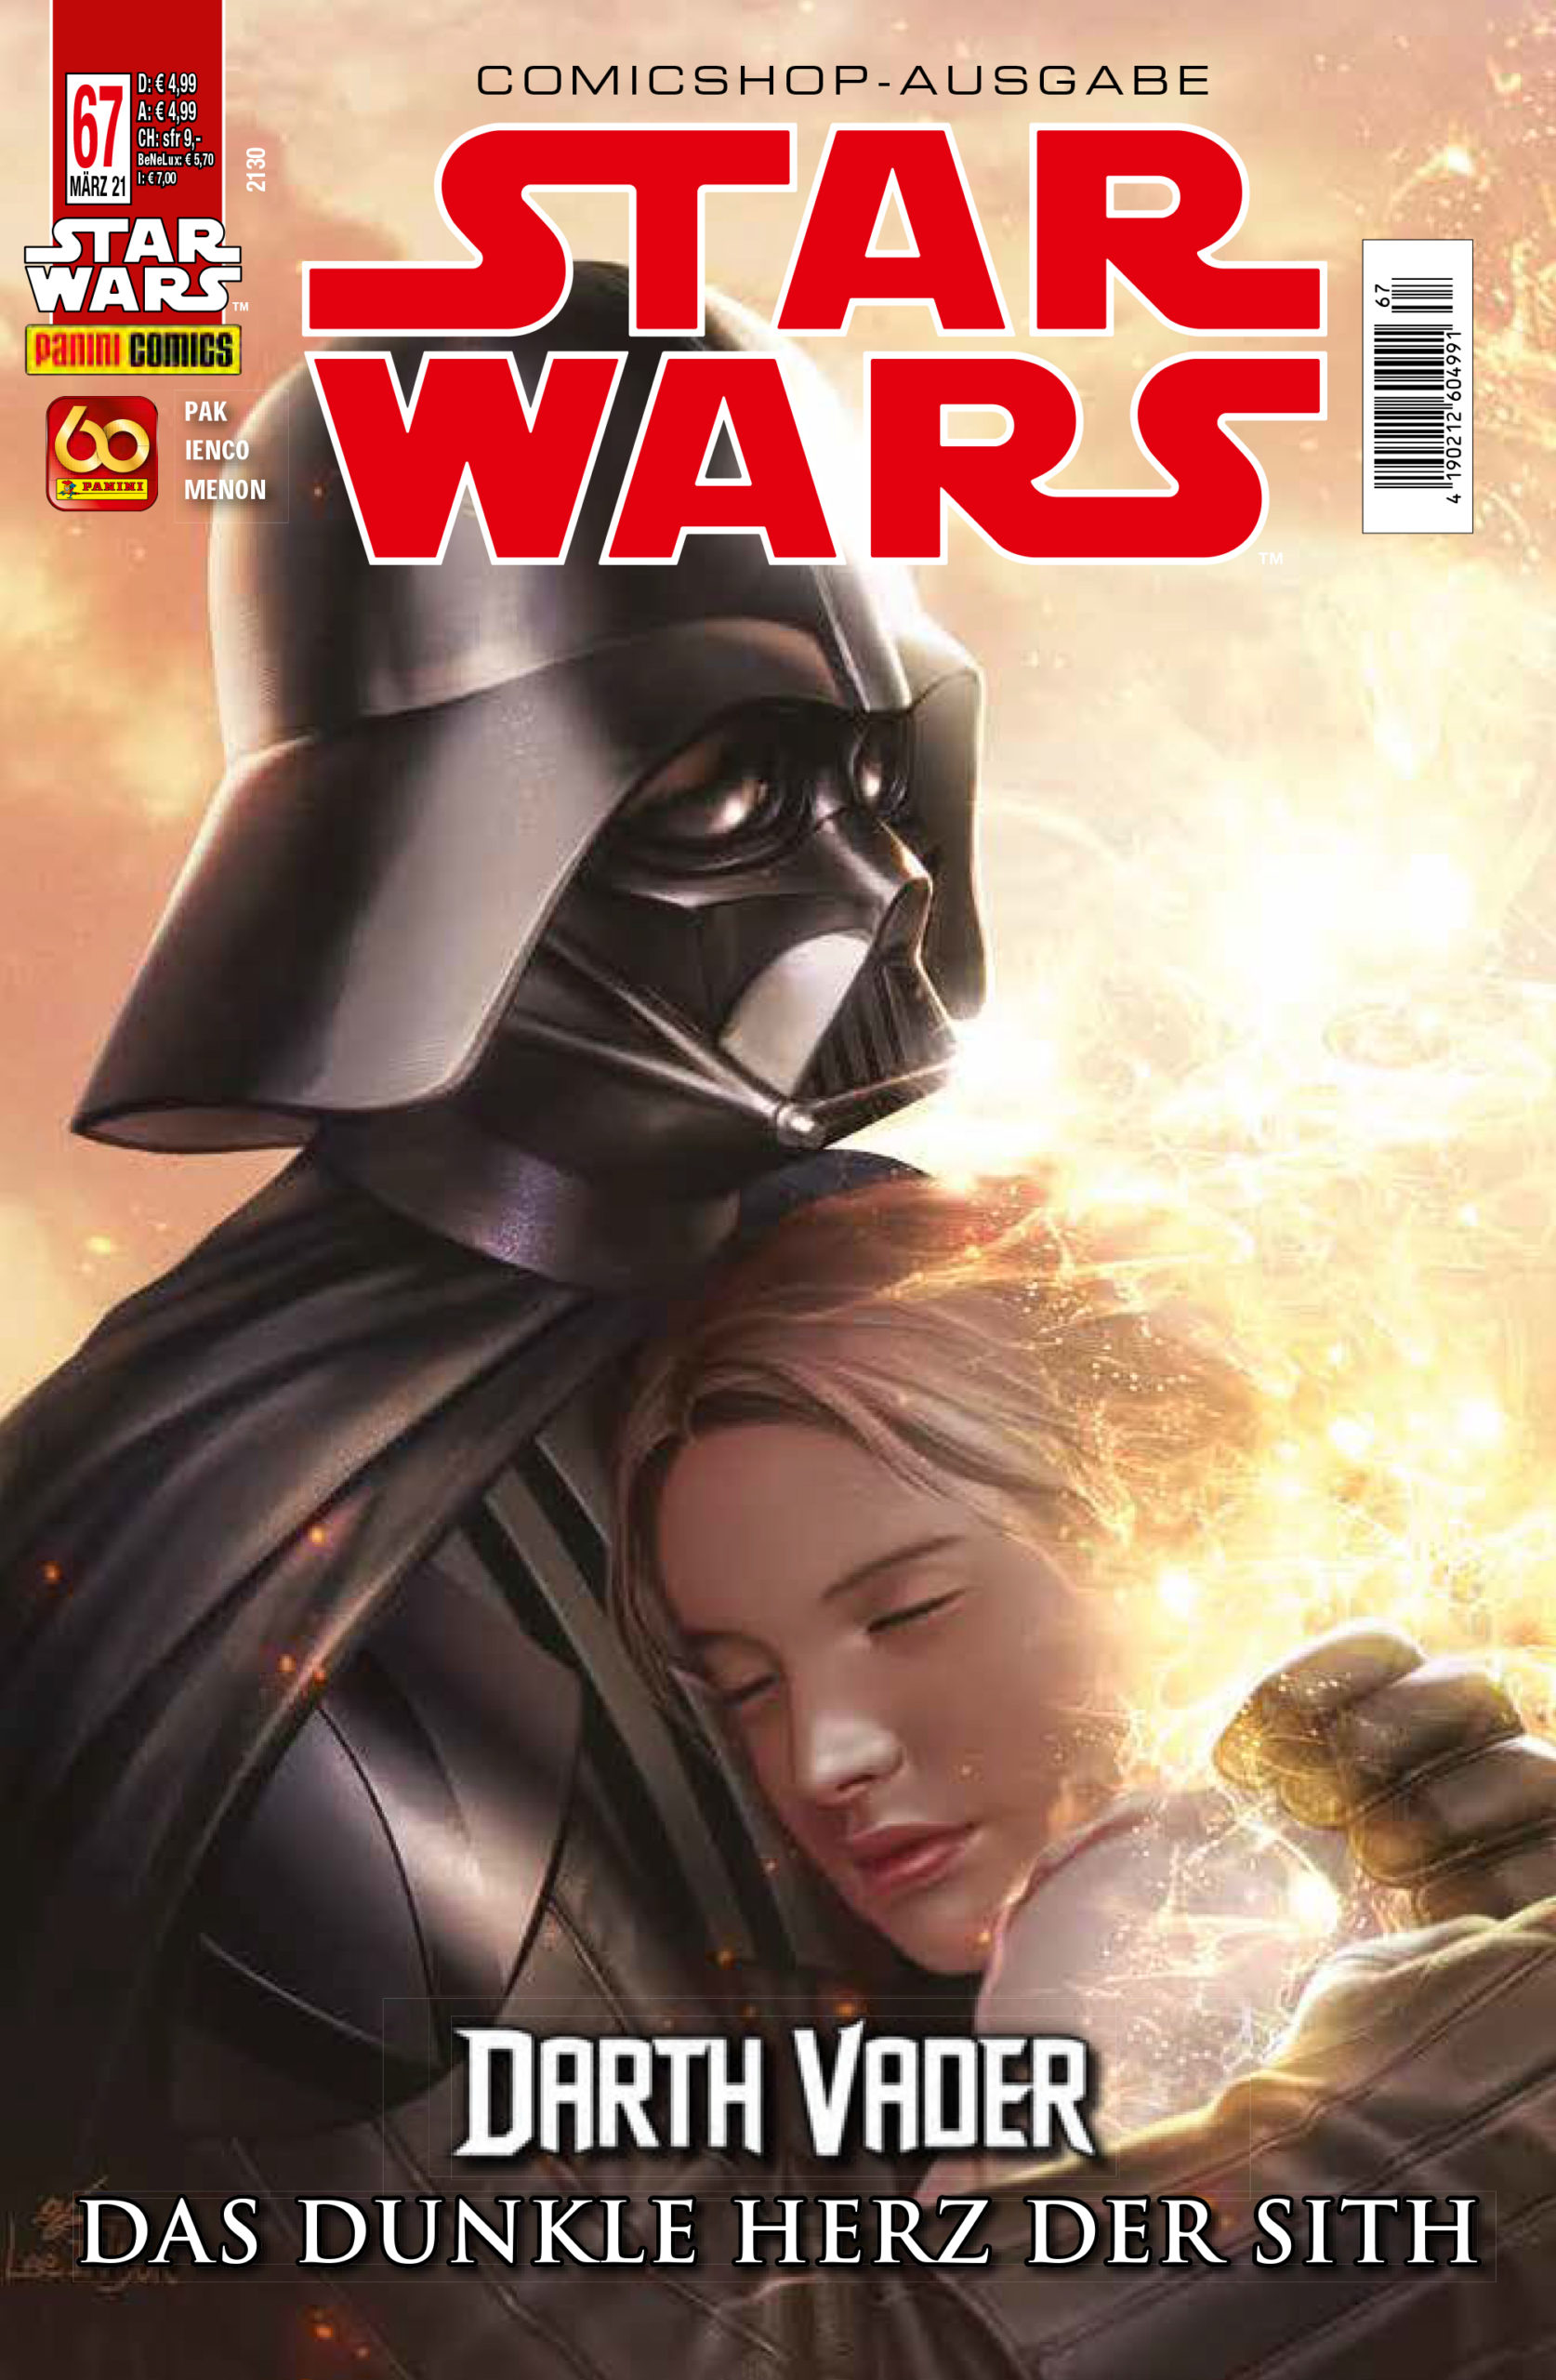 Star Wars #67 (Comicshop-Ausgabe) (24.02.2021)